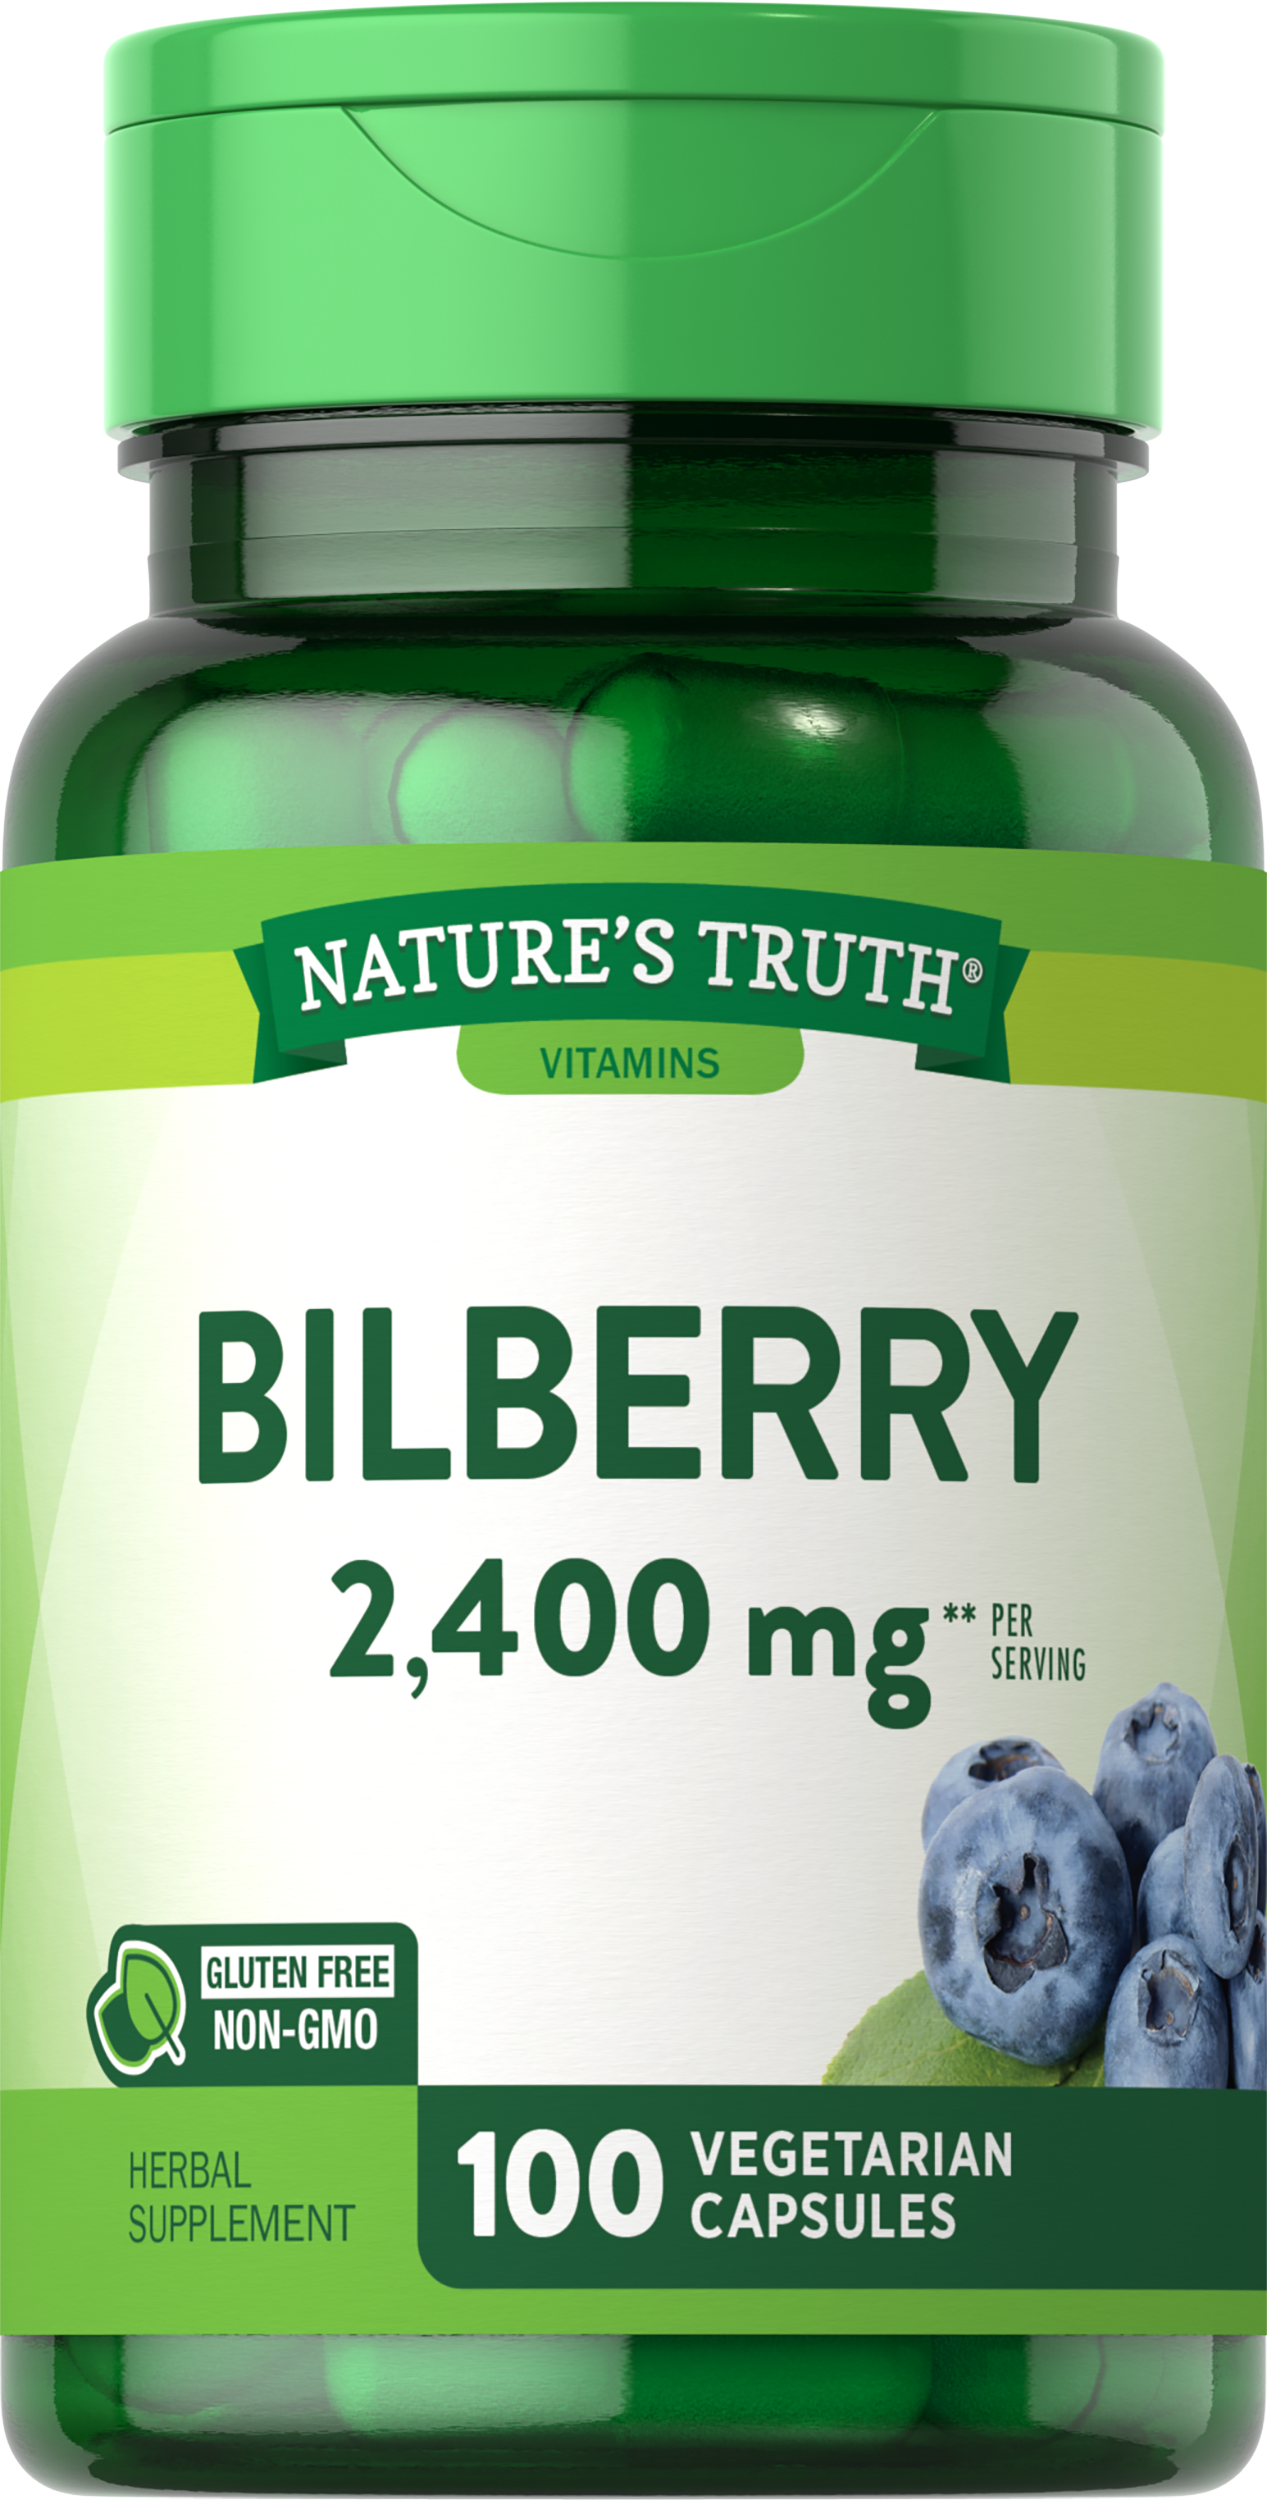 Bilberry 2400mg